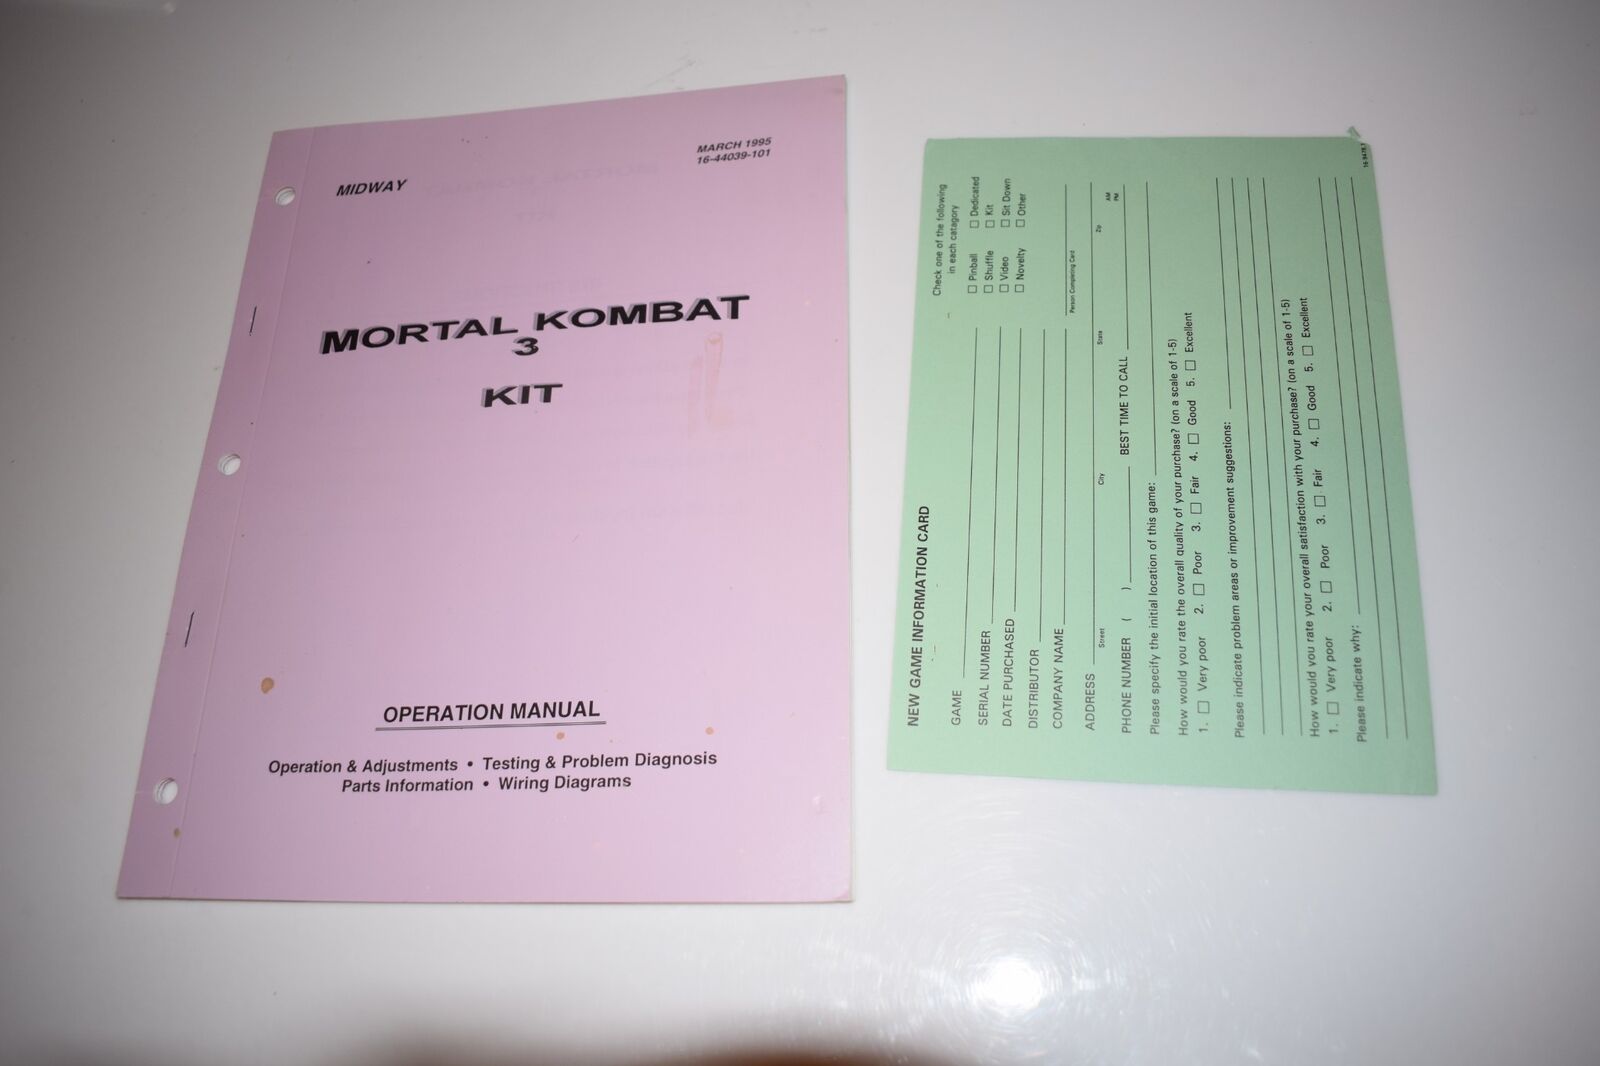 WILLIAMS MORTAL KOMBAT 3 OPERATION MANUAL 16-44039-101 MARCH 1995 (BOOK794)